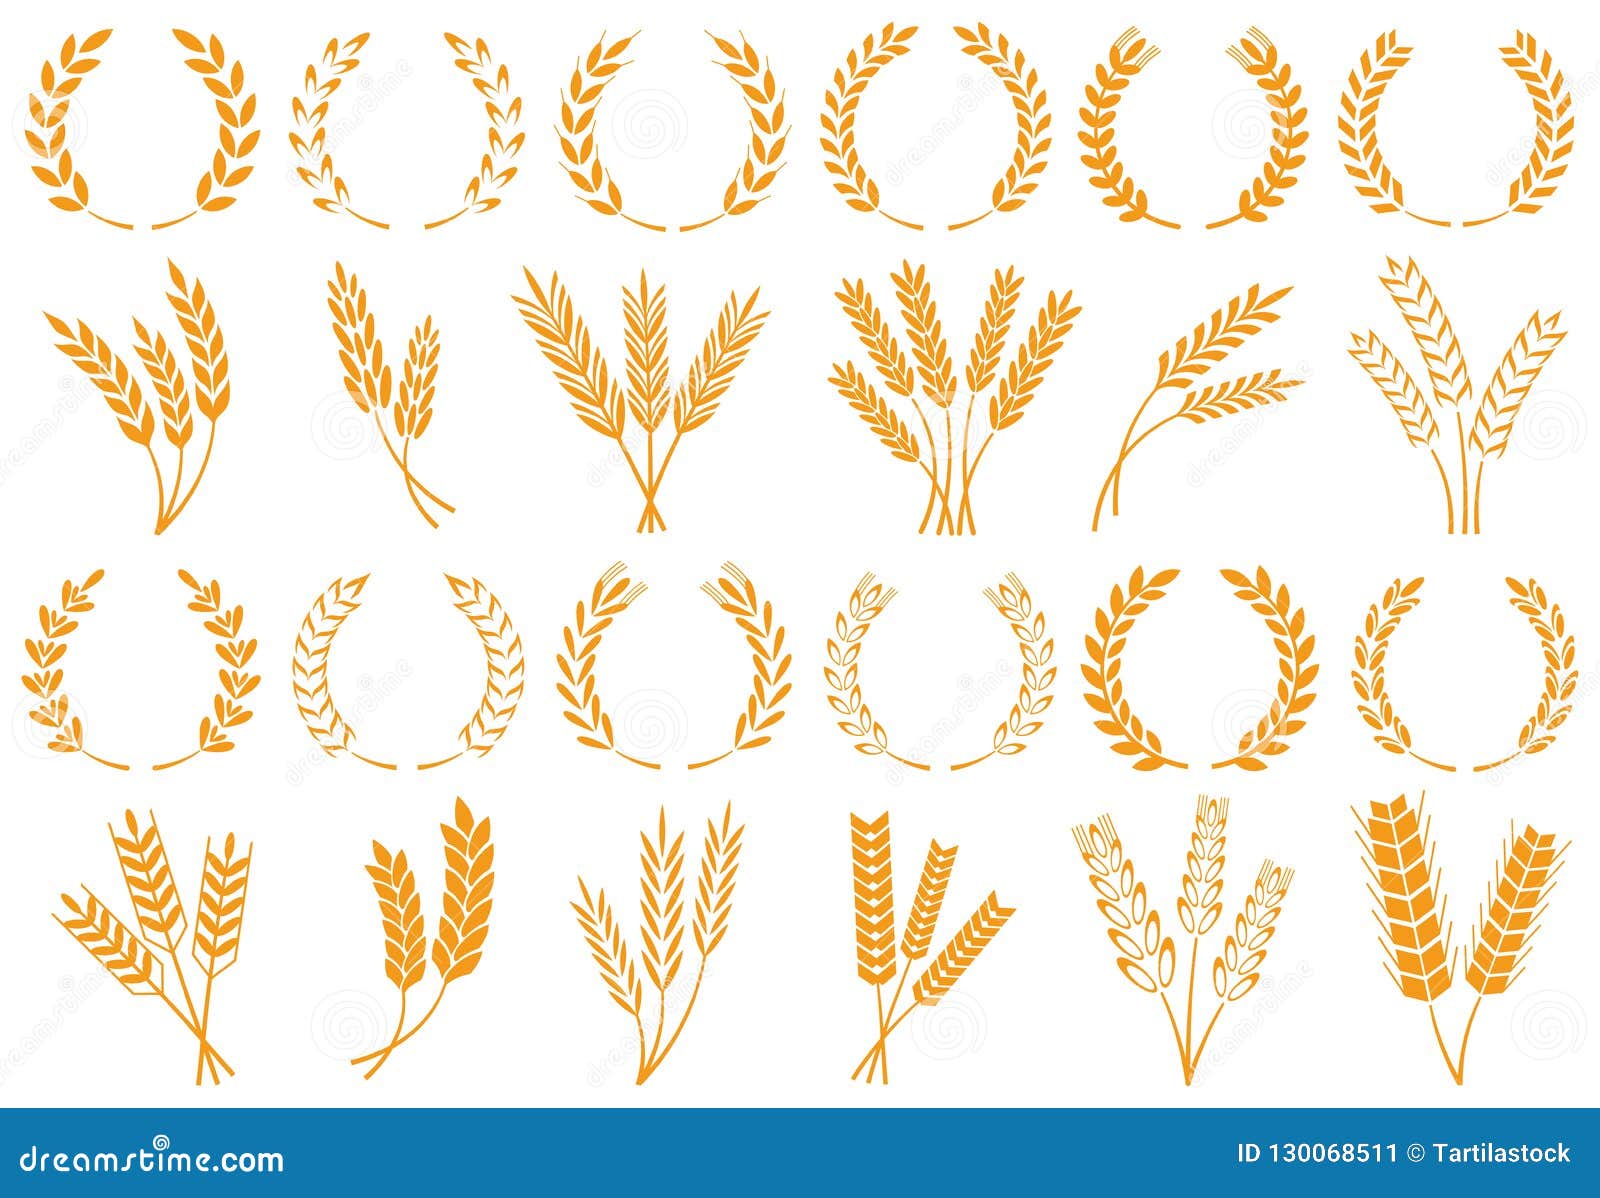 wheat or barley ears. harvest wheat grain, growth rice stalk and bread grains   set